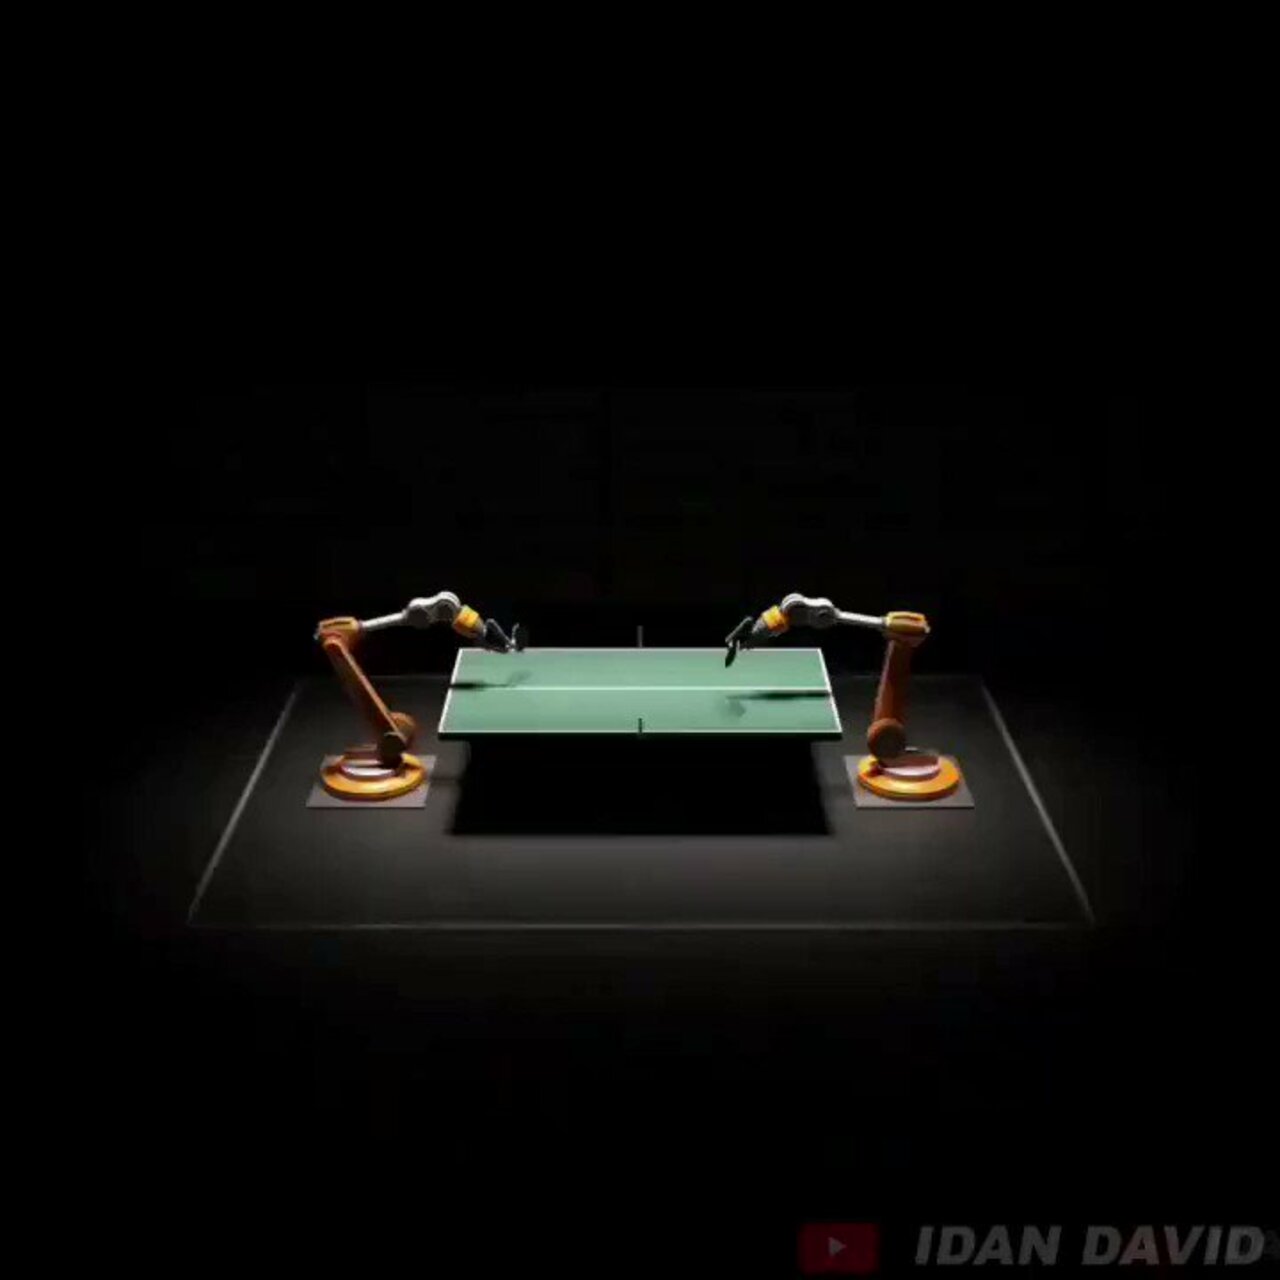 #Robot playing Table Tennis via @jblefevre60 #AI #ArtificialIntelligence #MI #Robotics #Sports #Innovation #RPA #Automation cc: @ronald_vanloon @pbalakrishnarao @chr1sa https://t.co/00yJBT5DBP